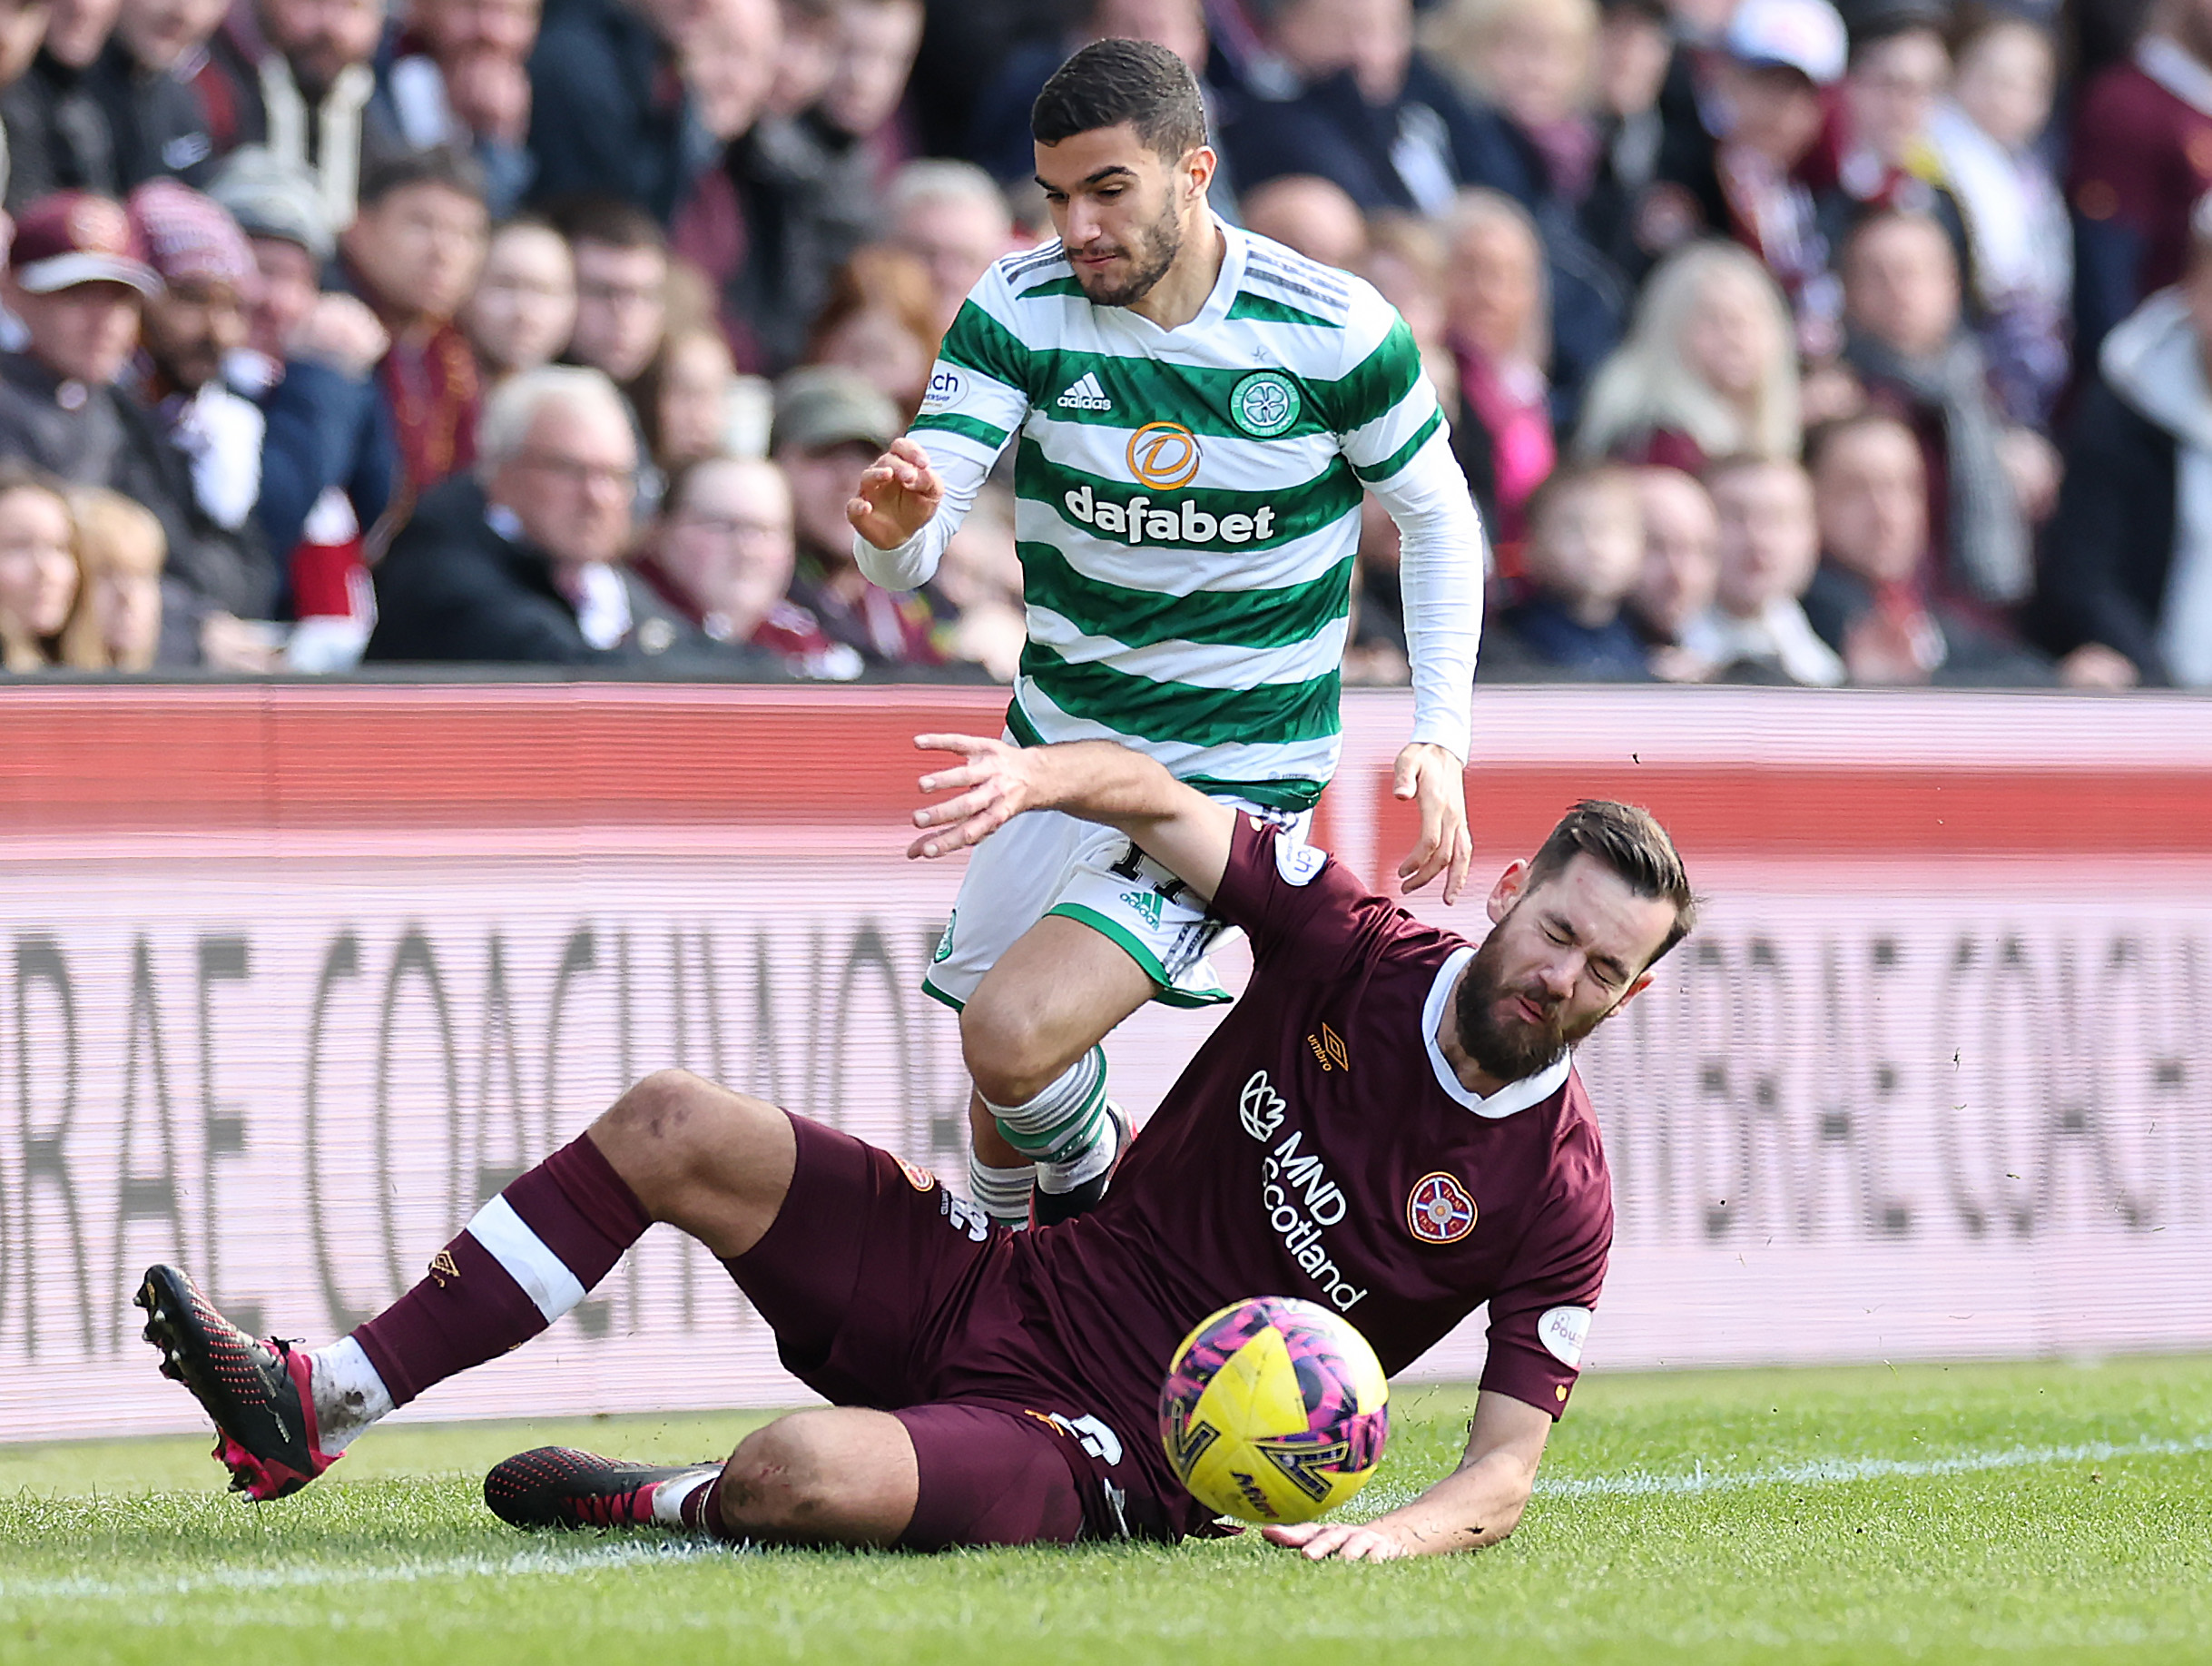 Celtic attacker Liel Abada in action against Hearts